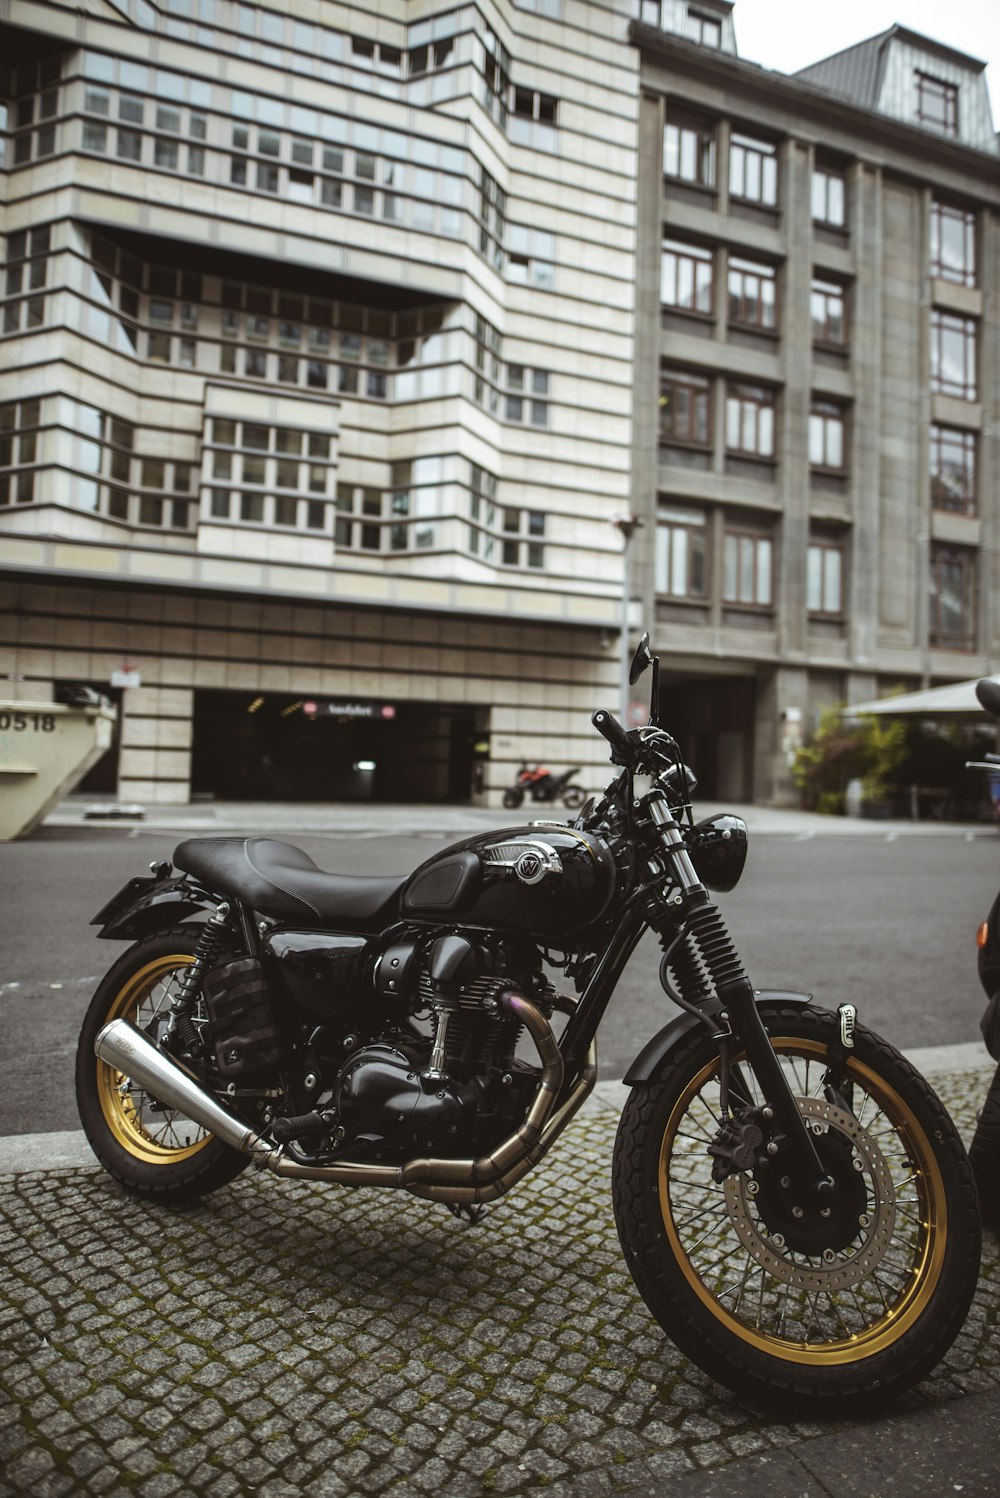 Motocicleta negra y gris